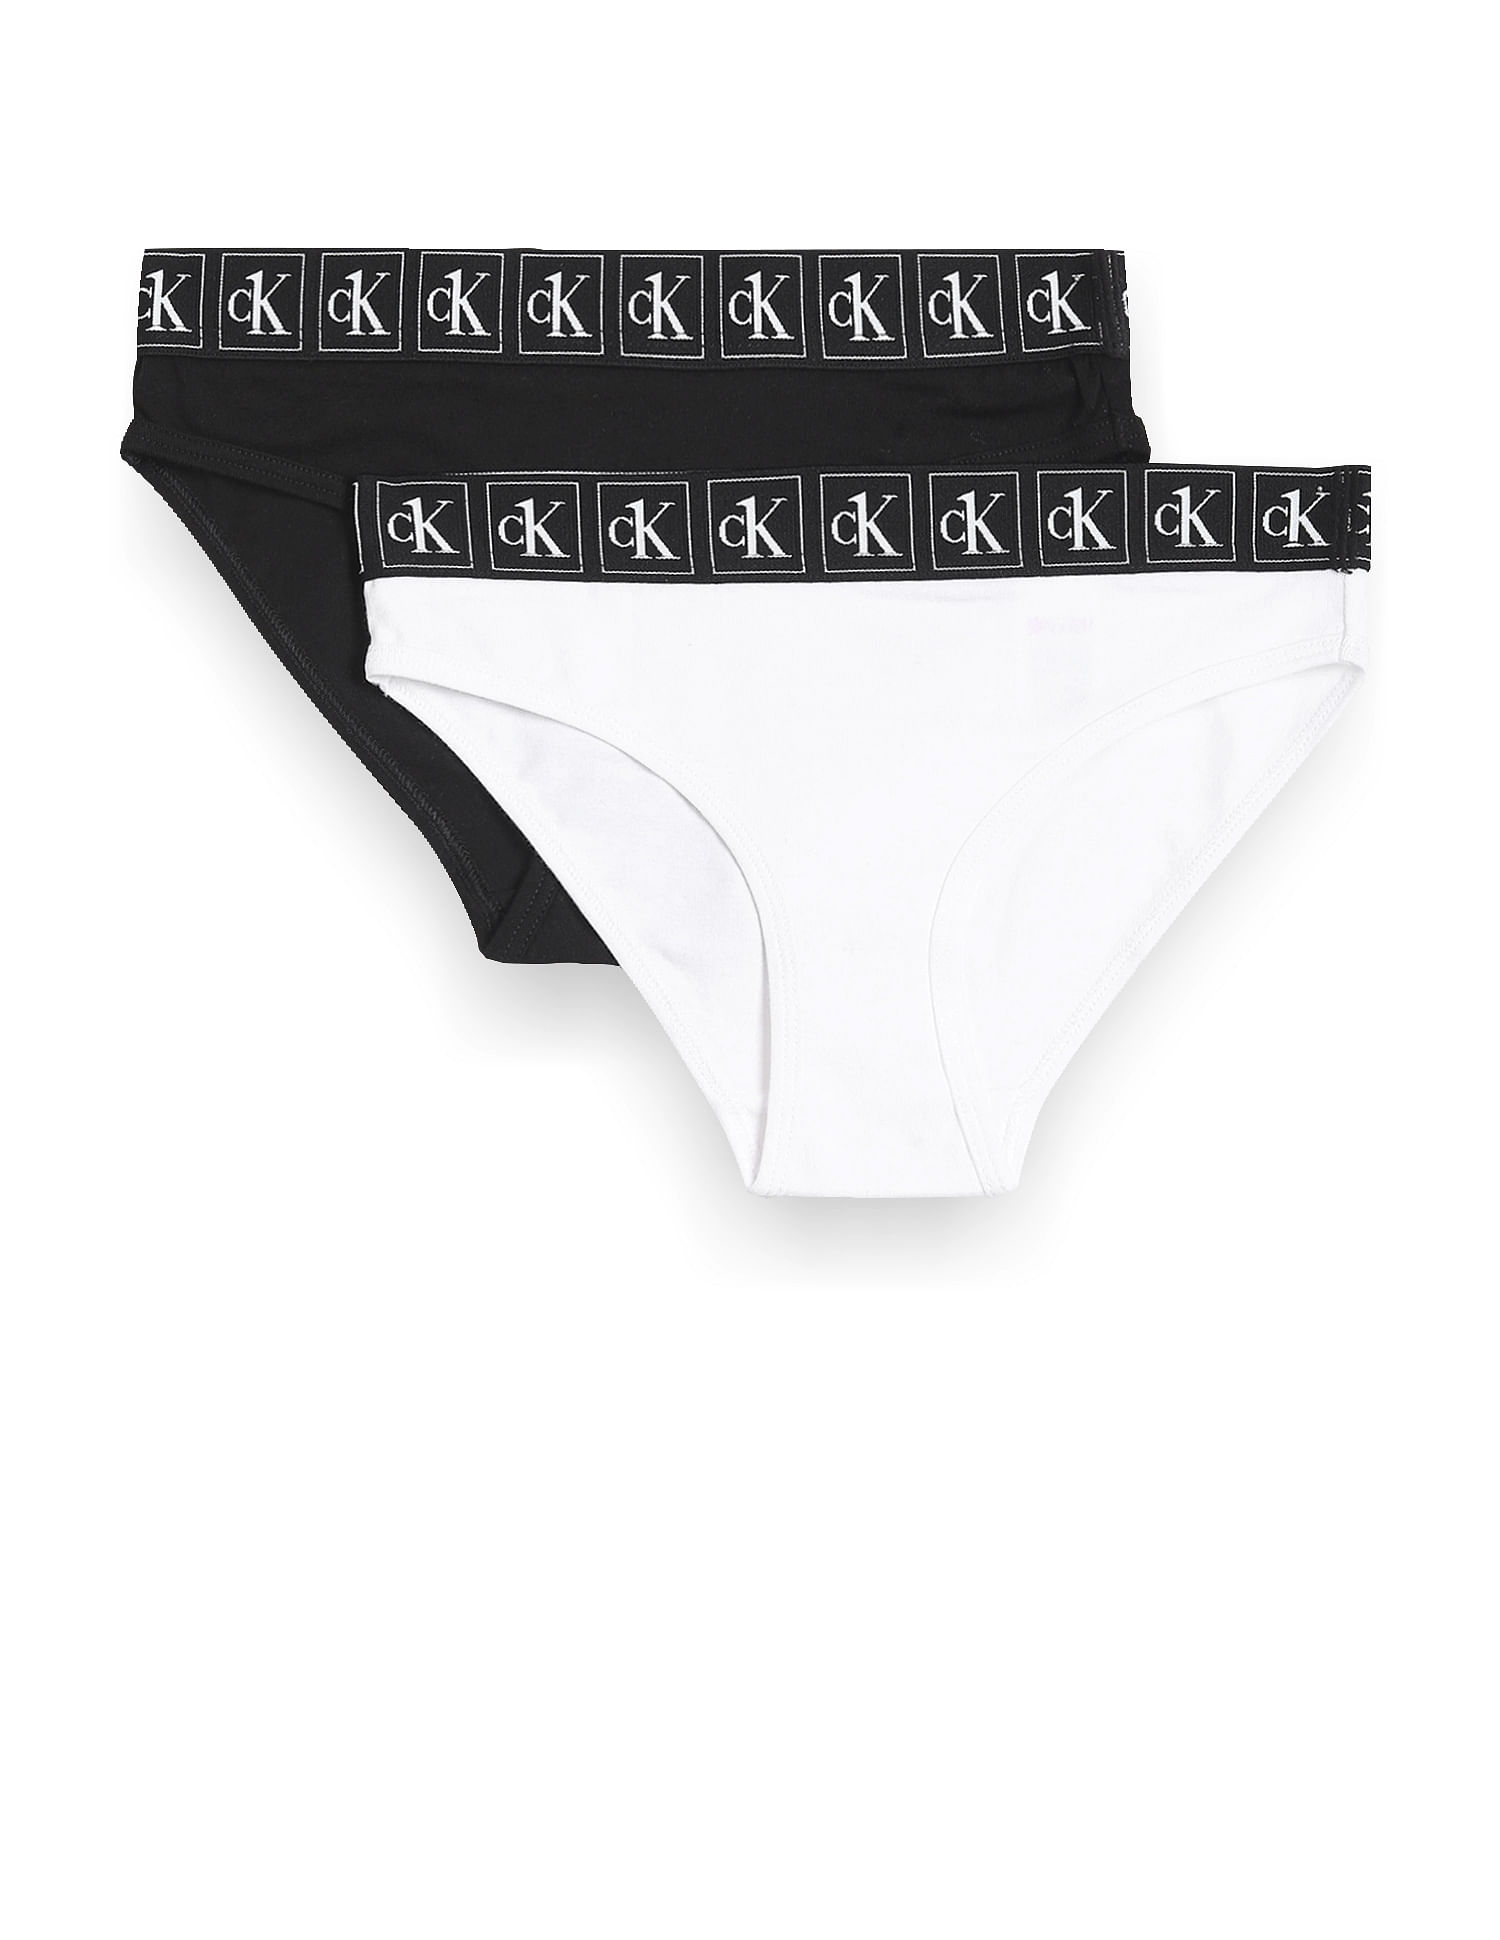 Calvin Klein Girls 2 Pack Bikini Briefs - White/Black